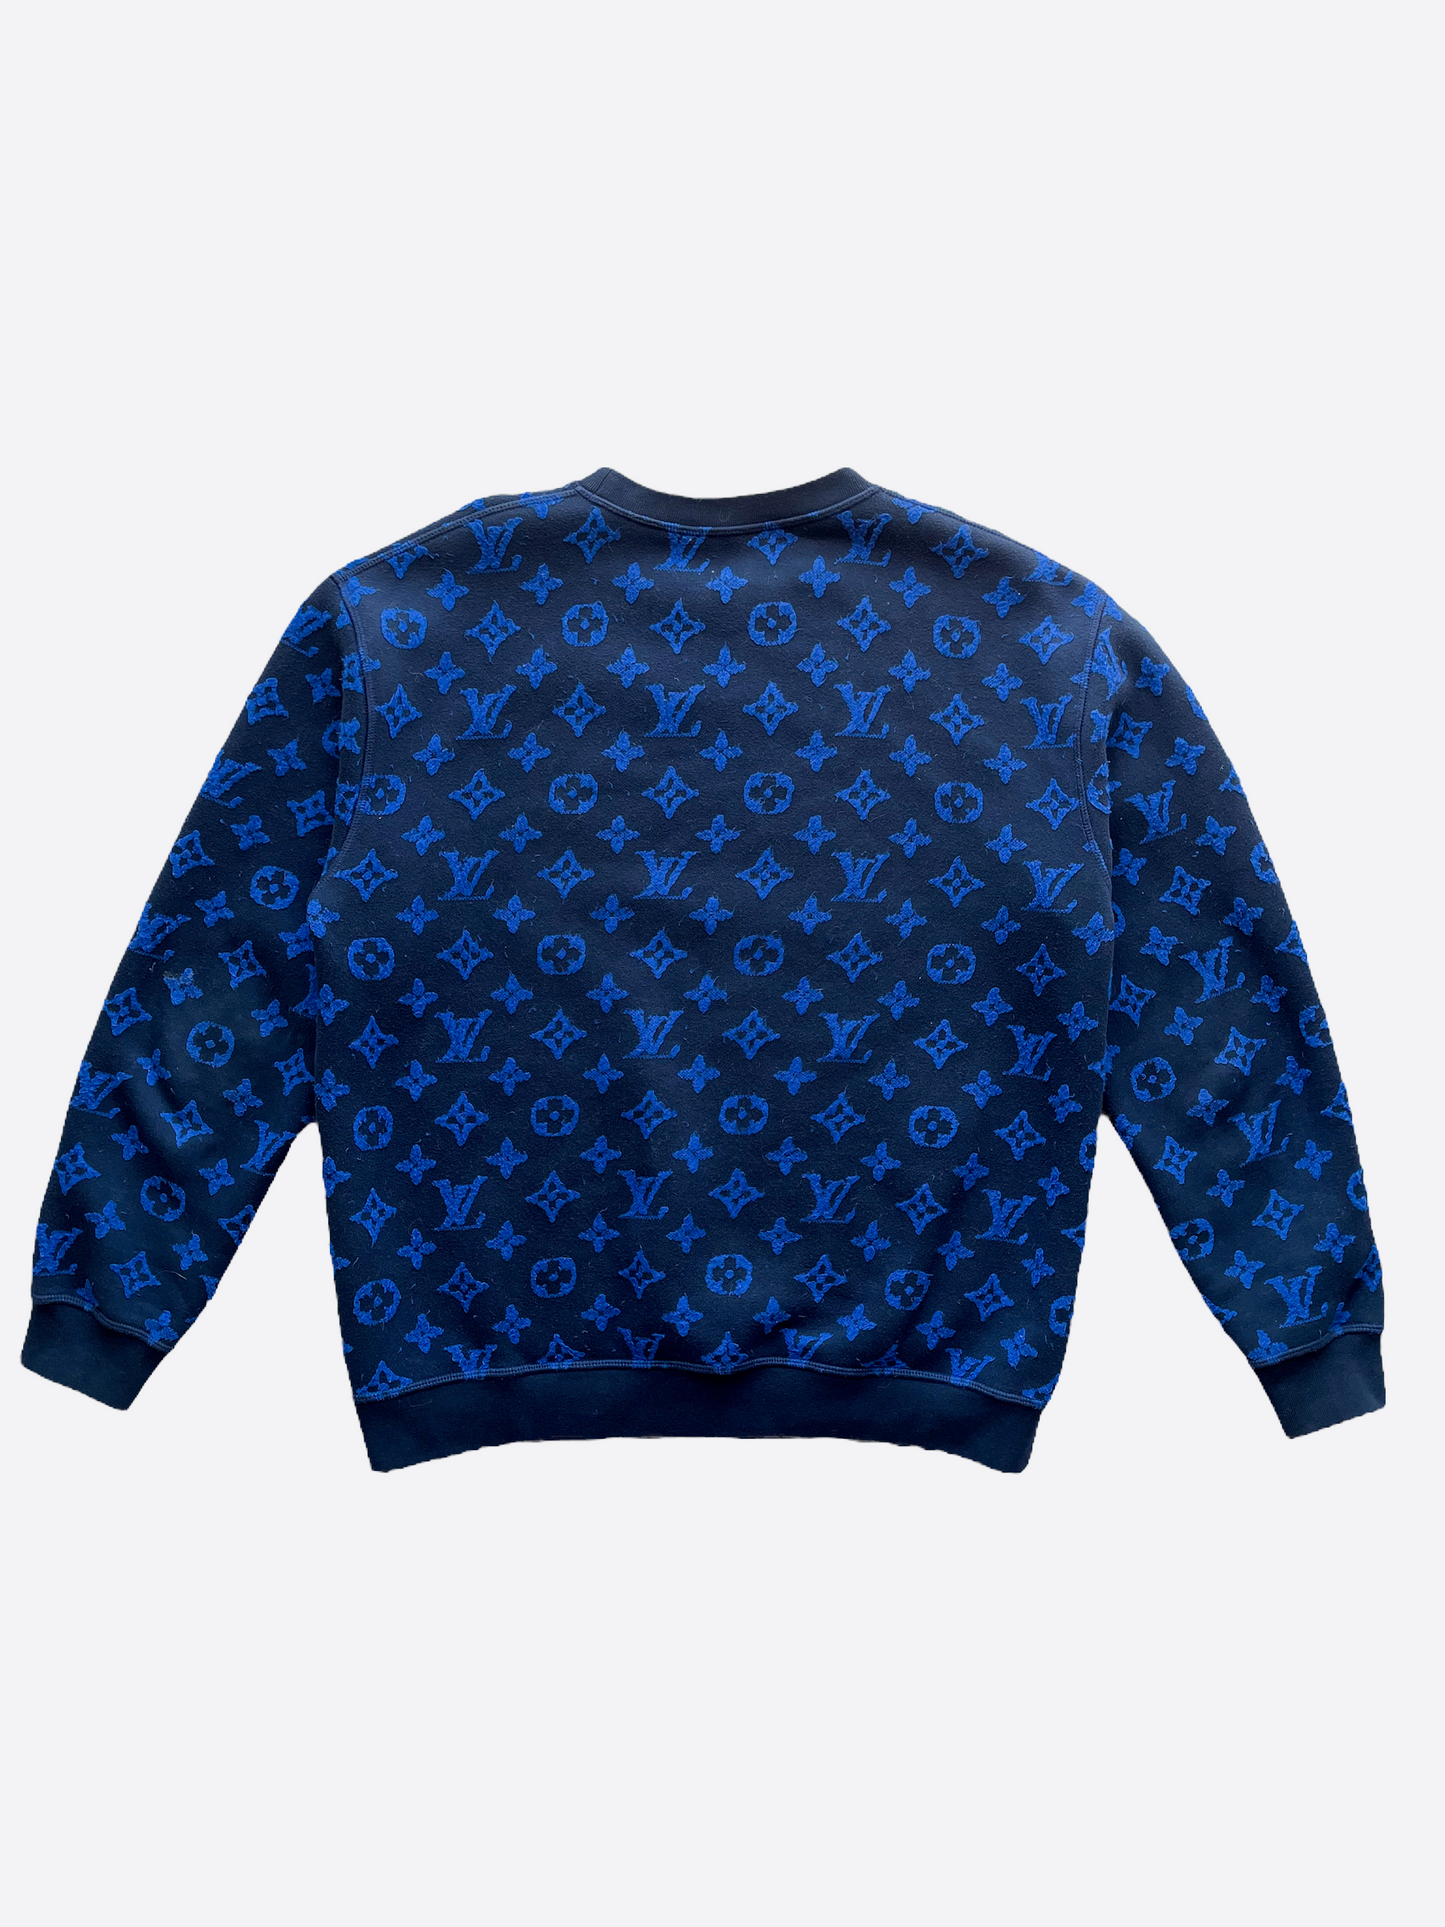 Louis Vuitton Monogram Jacquard Sweater Blue AUTHENTIC FROM JAPAN 